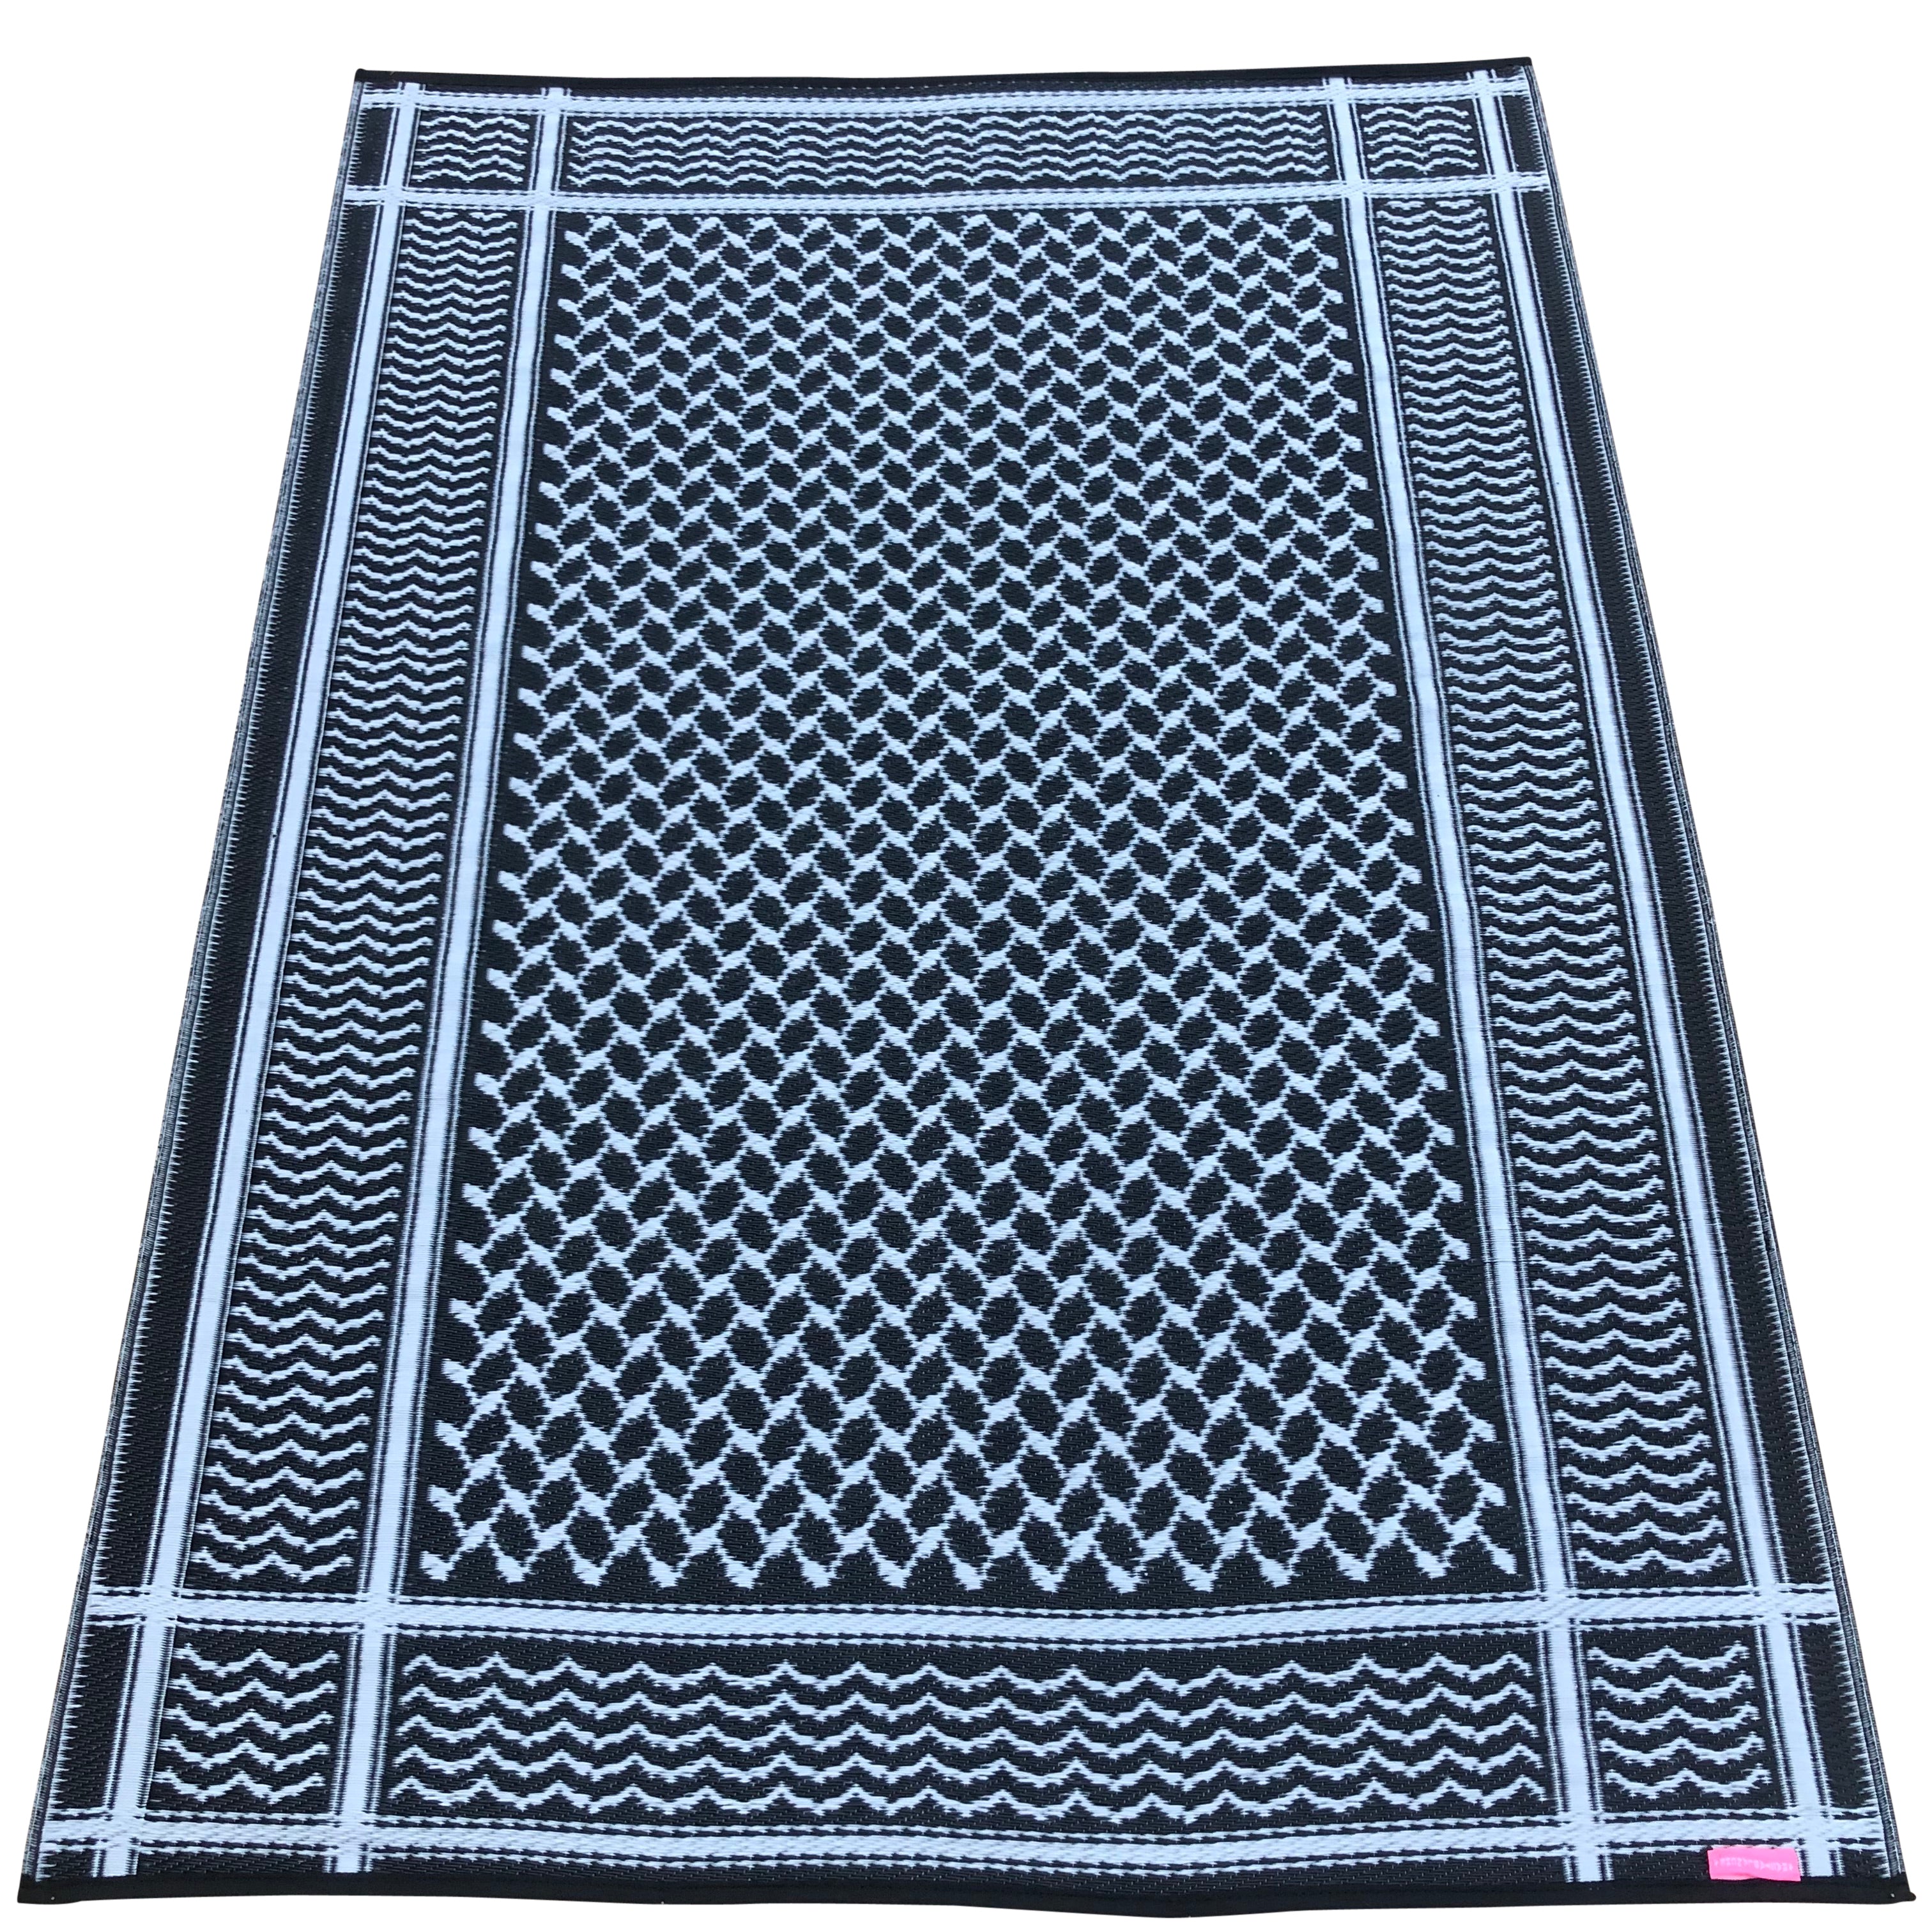 Tanke Styring Sidst Plastik tæppe, 150 x 210, partisan design, black / white – Rastablanche